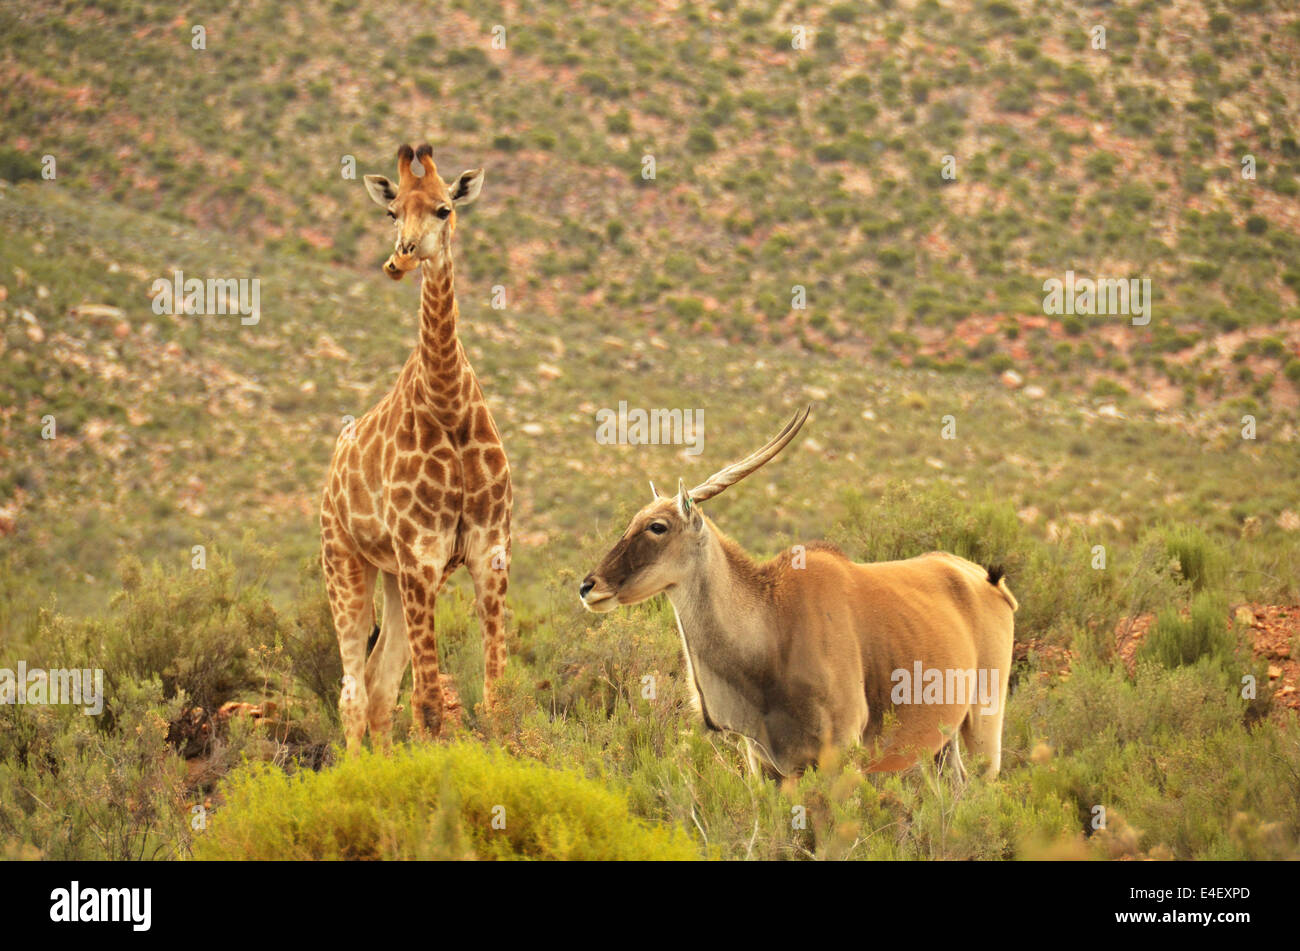 jirafa joven y tierra en matorral Foto de stock